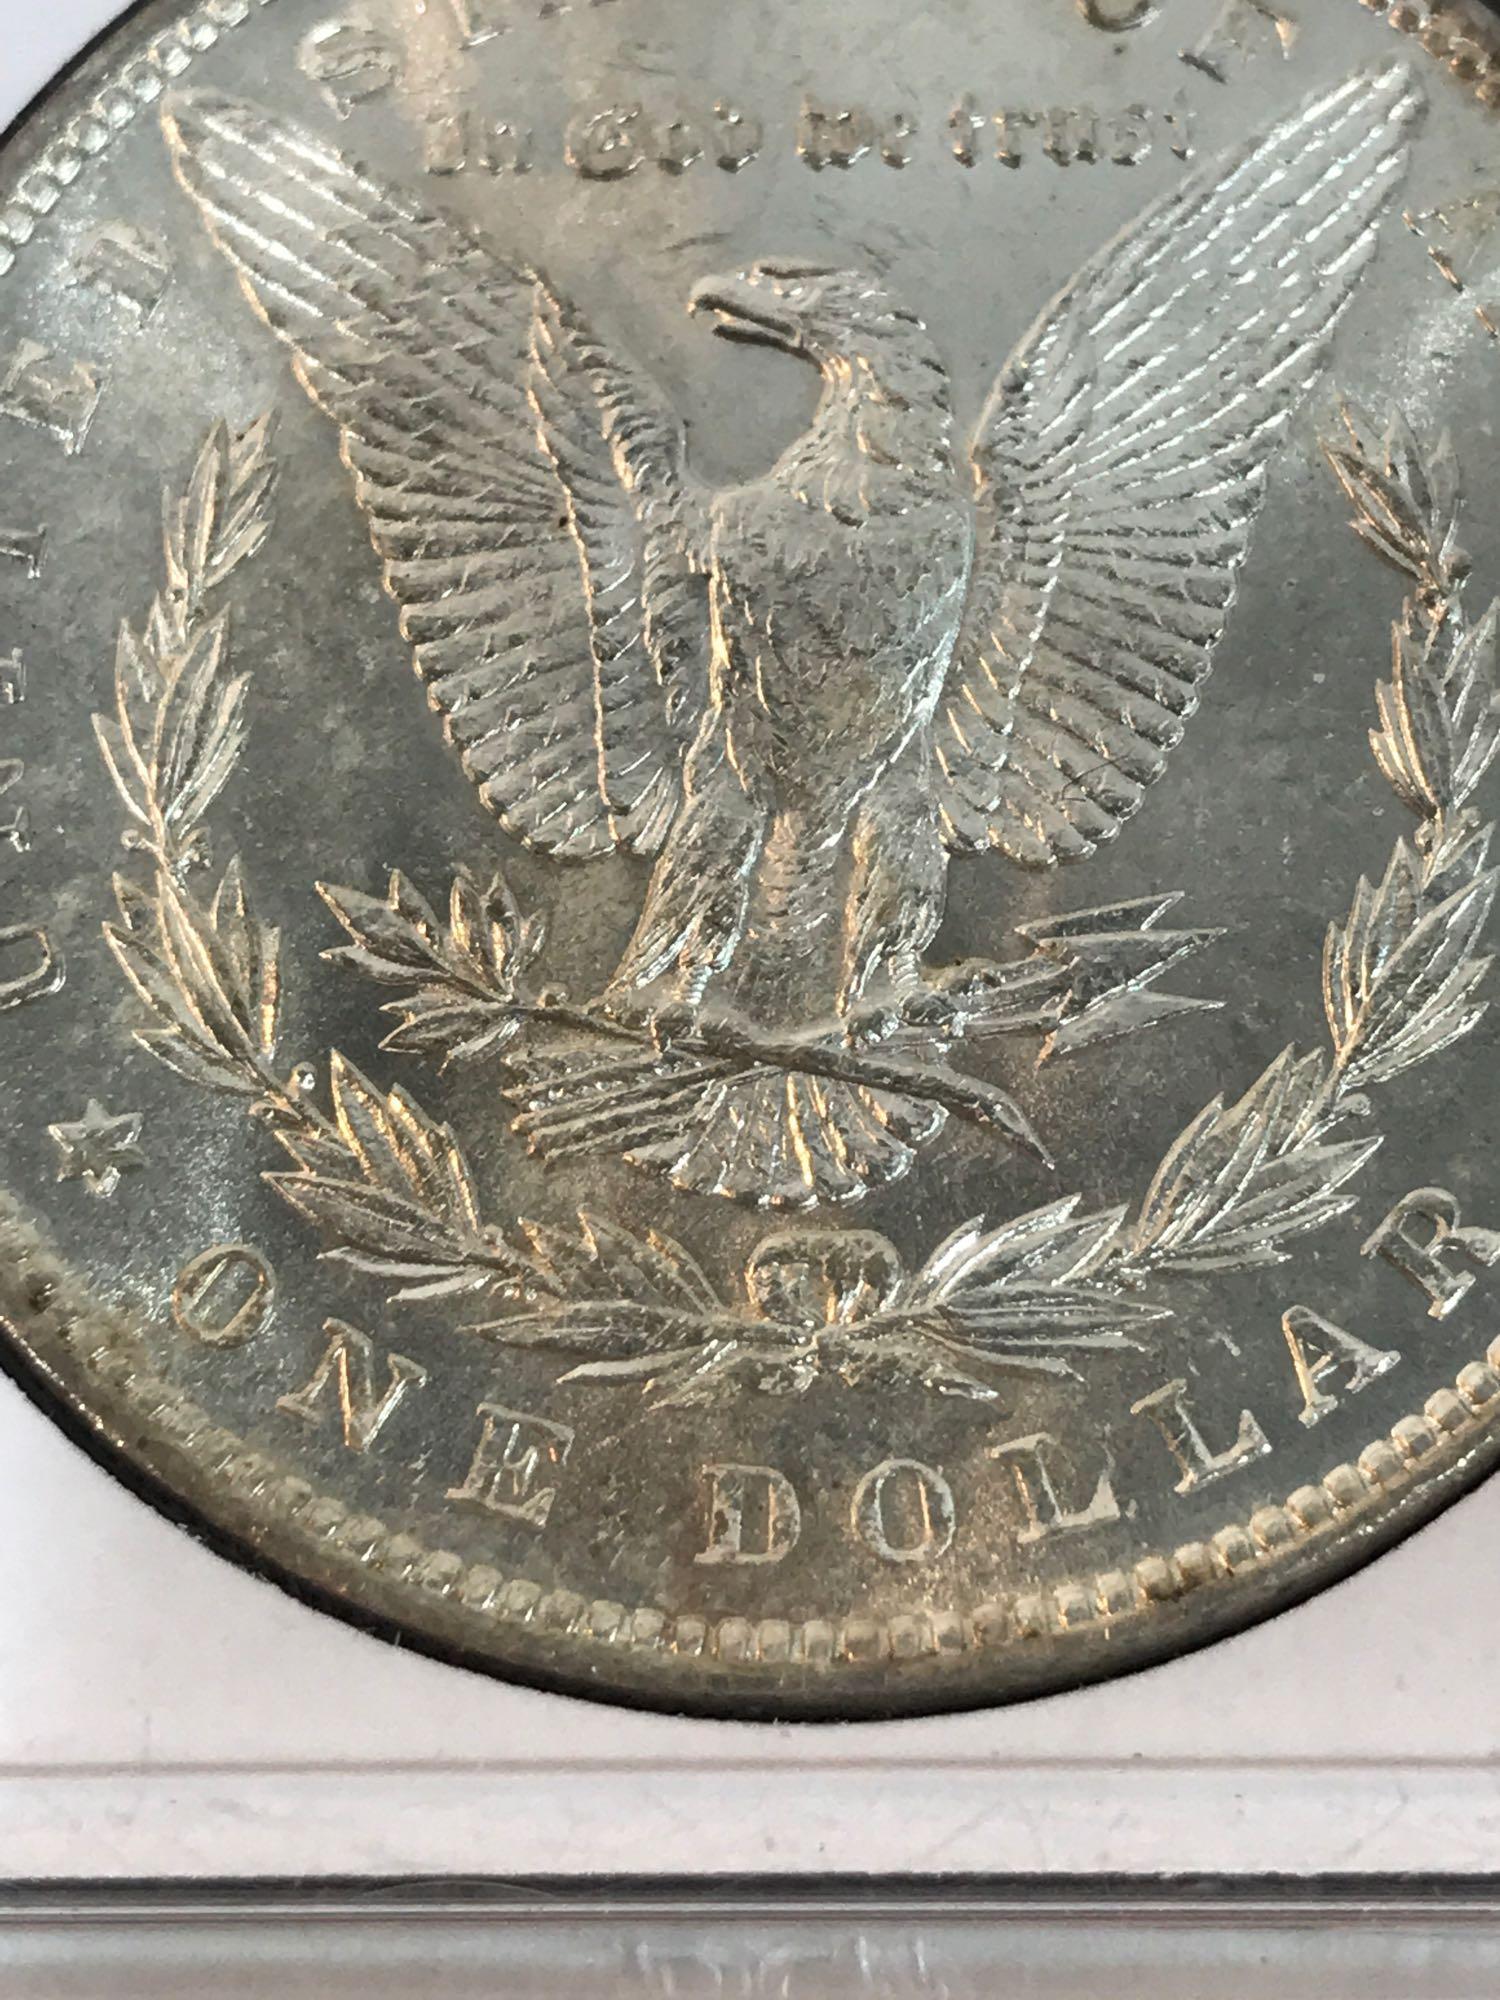 1881-S 1886 Morgan Silver Dollar 2 Units